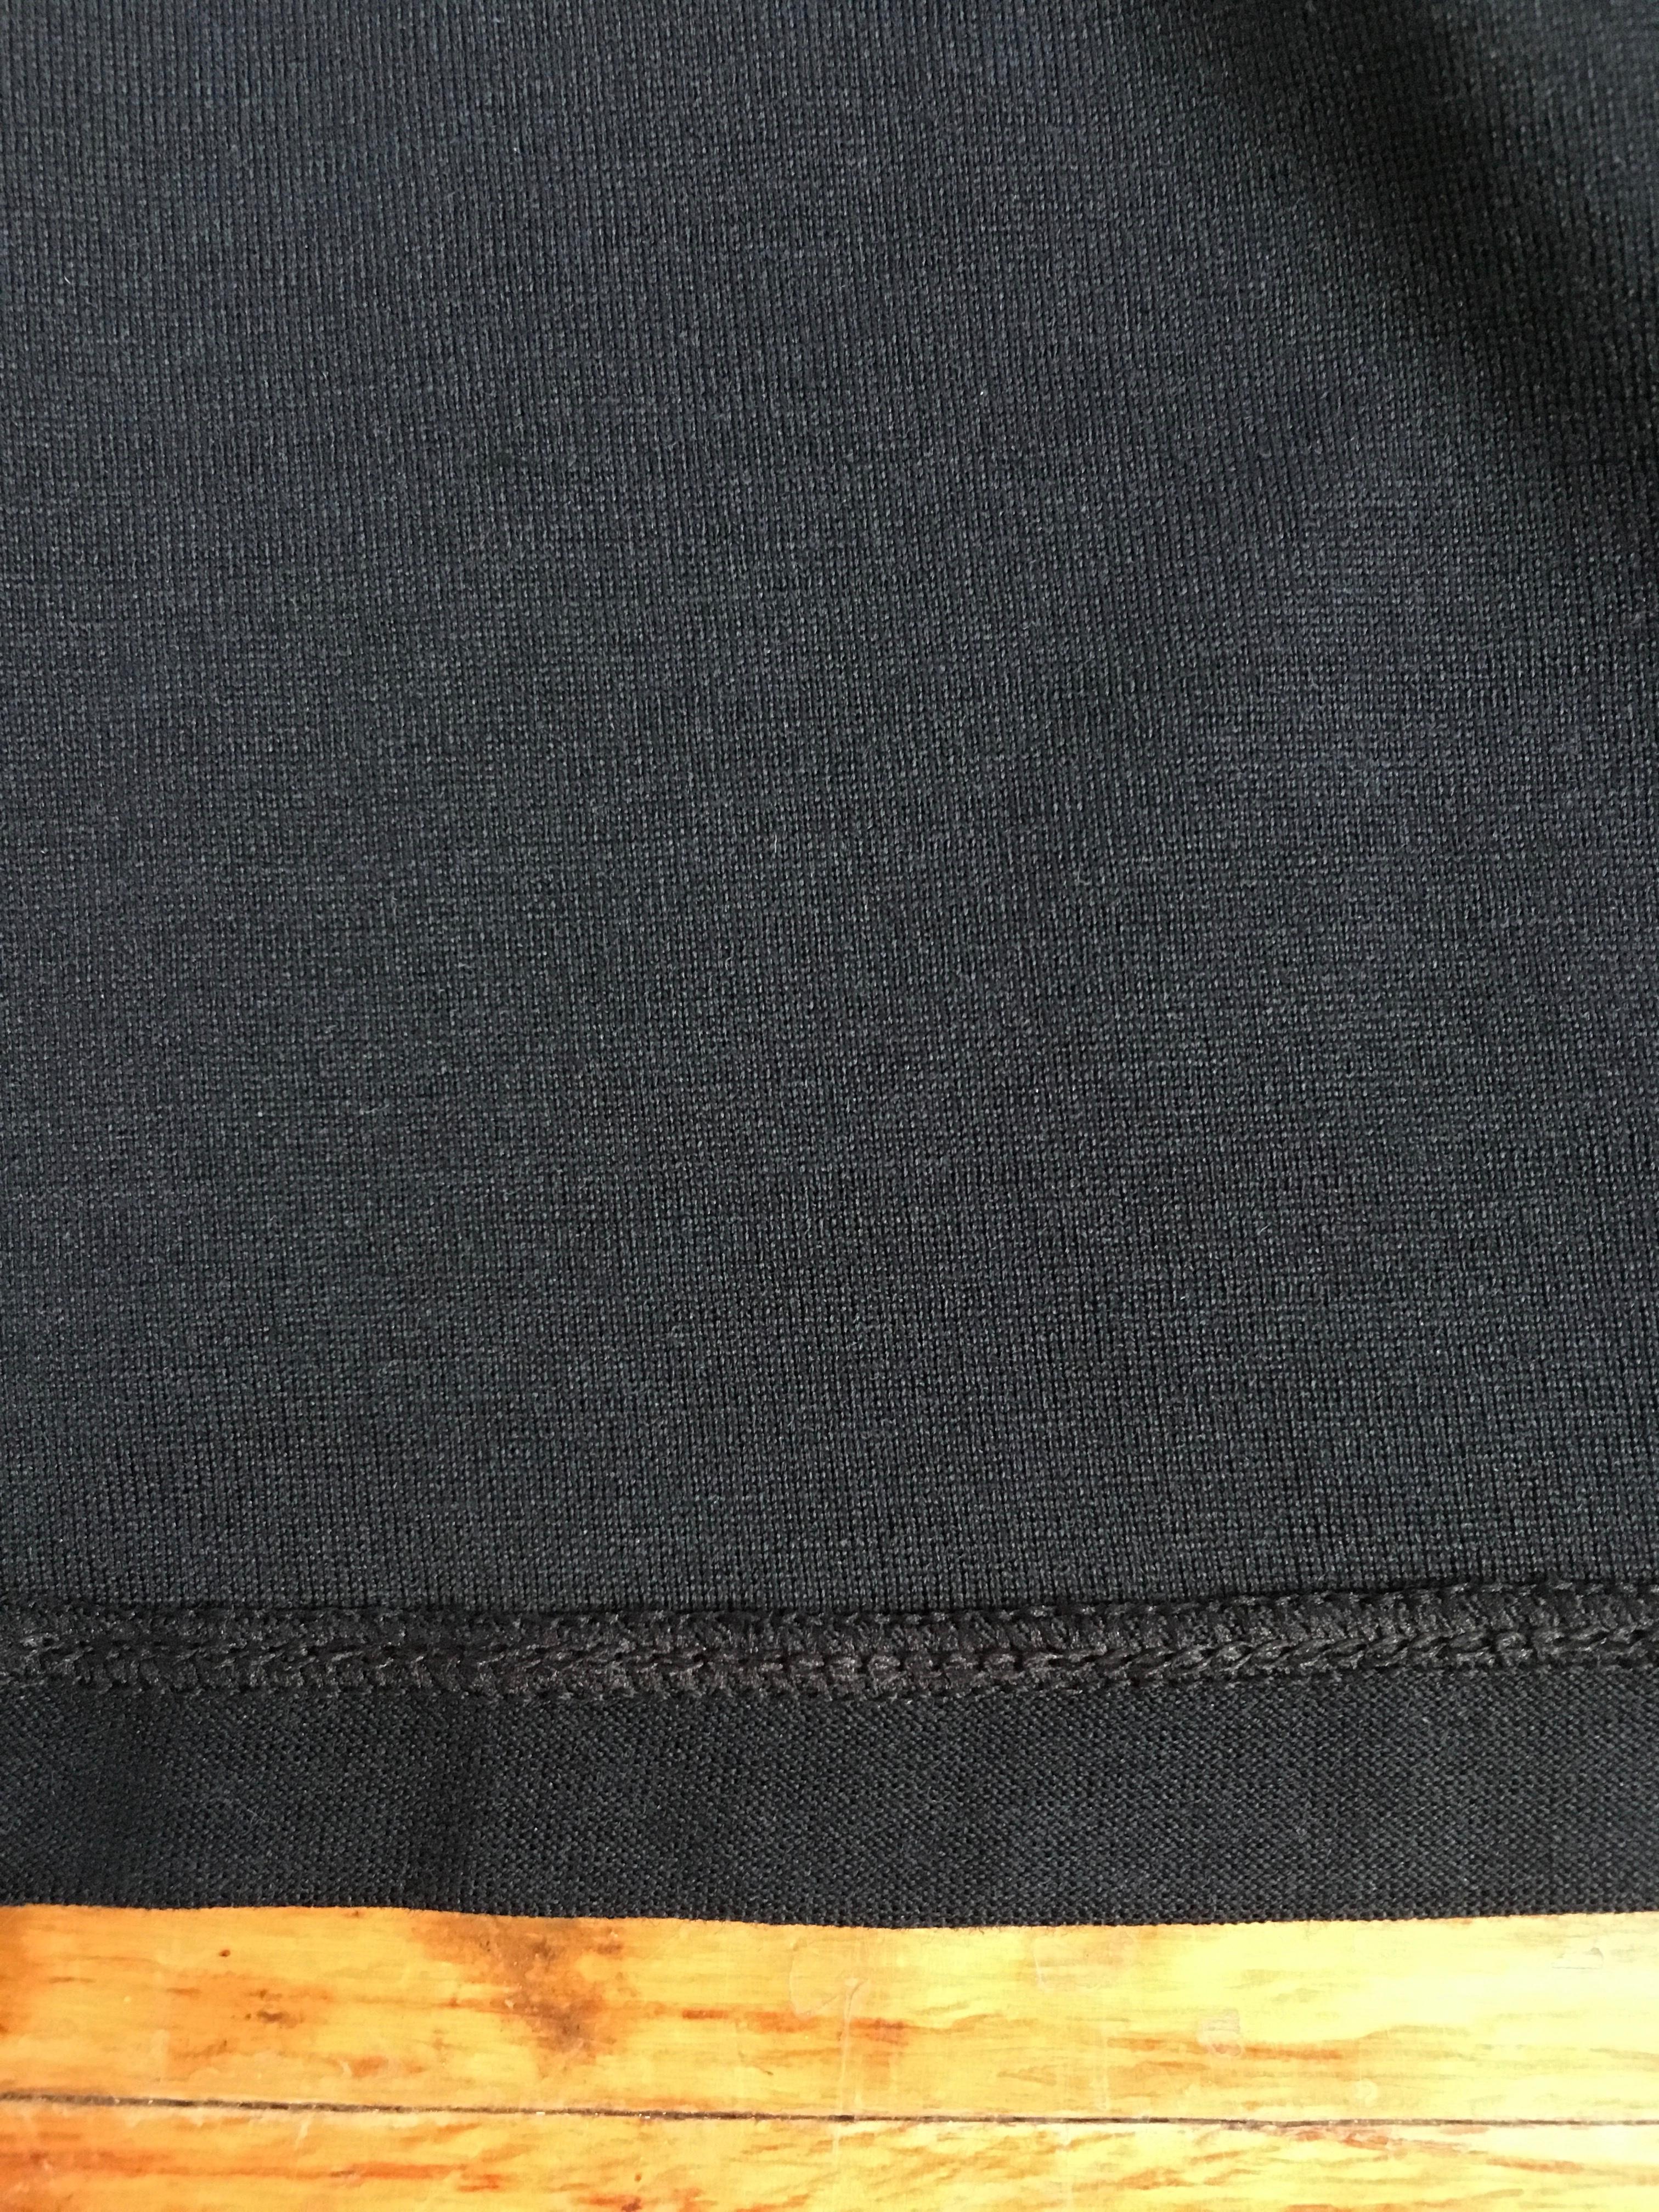 Emanuel Ungaro 1990s Silk & Cotton Pleated Black Skirt Size 10. For Sale 13